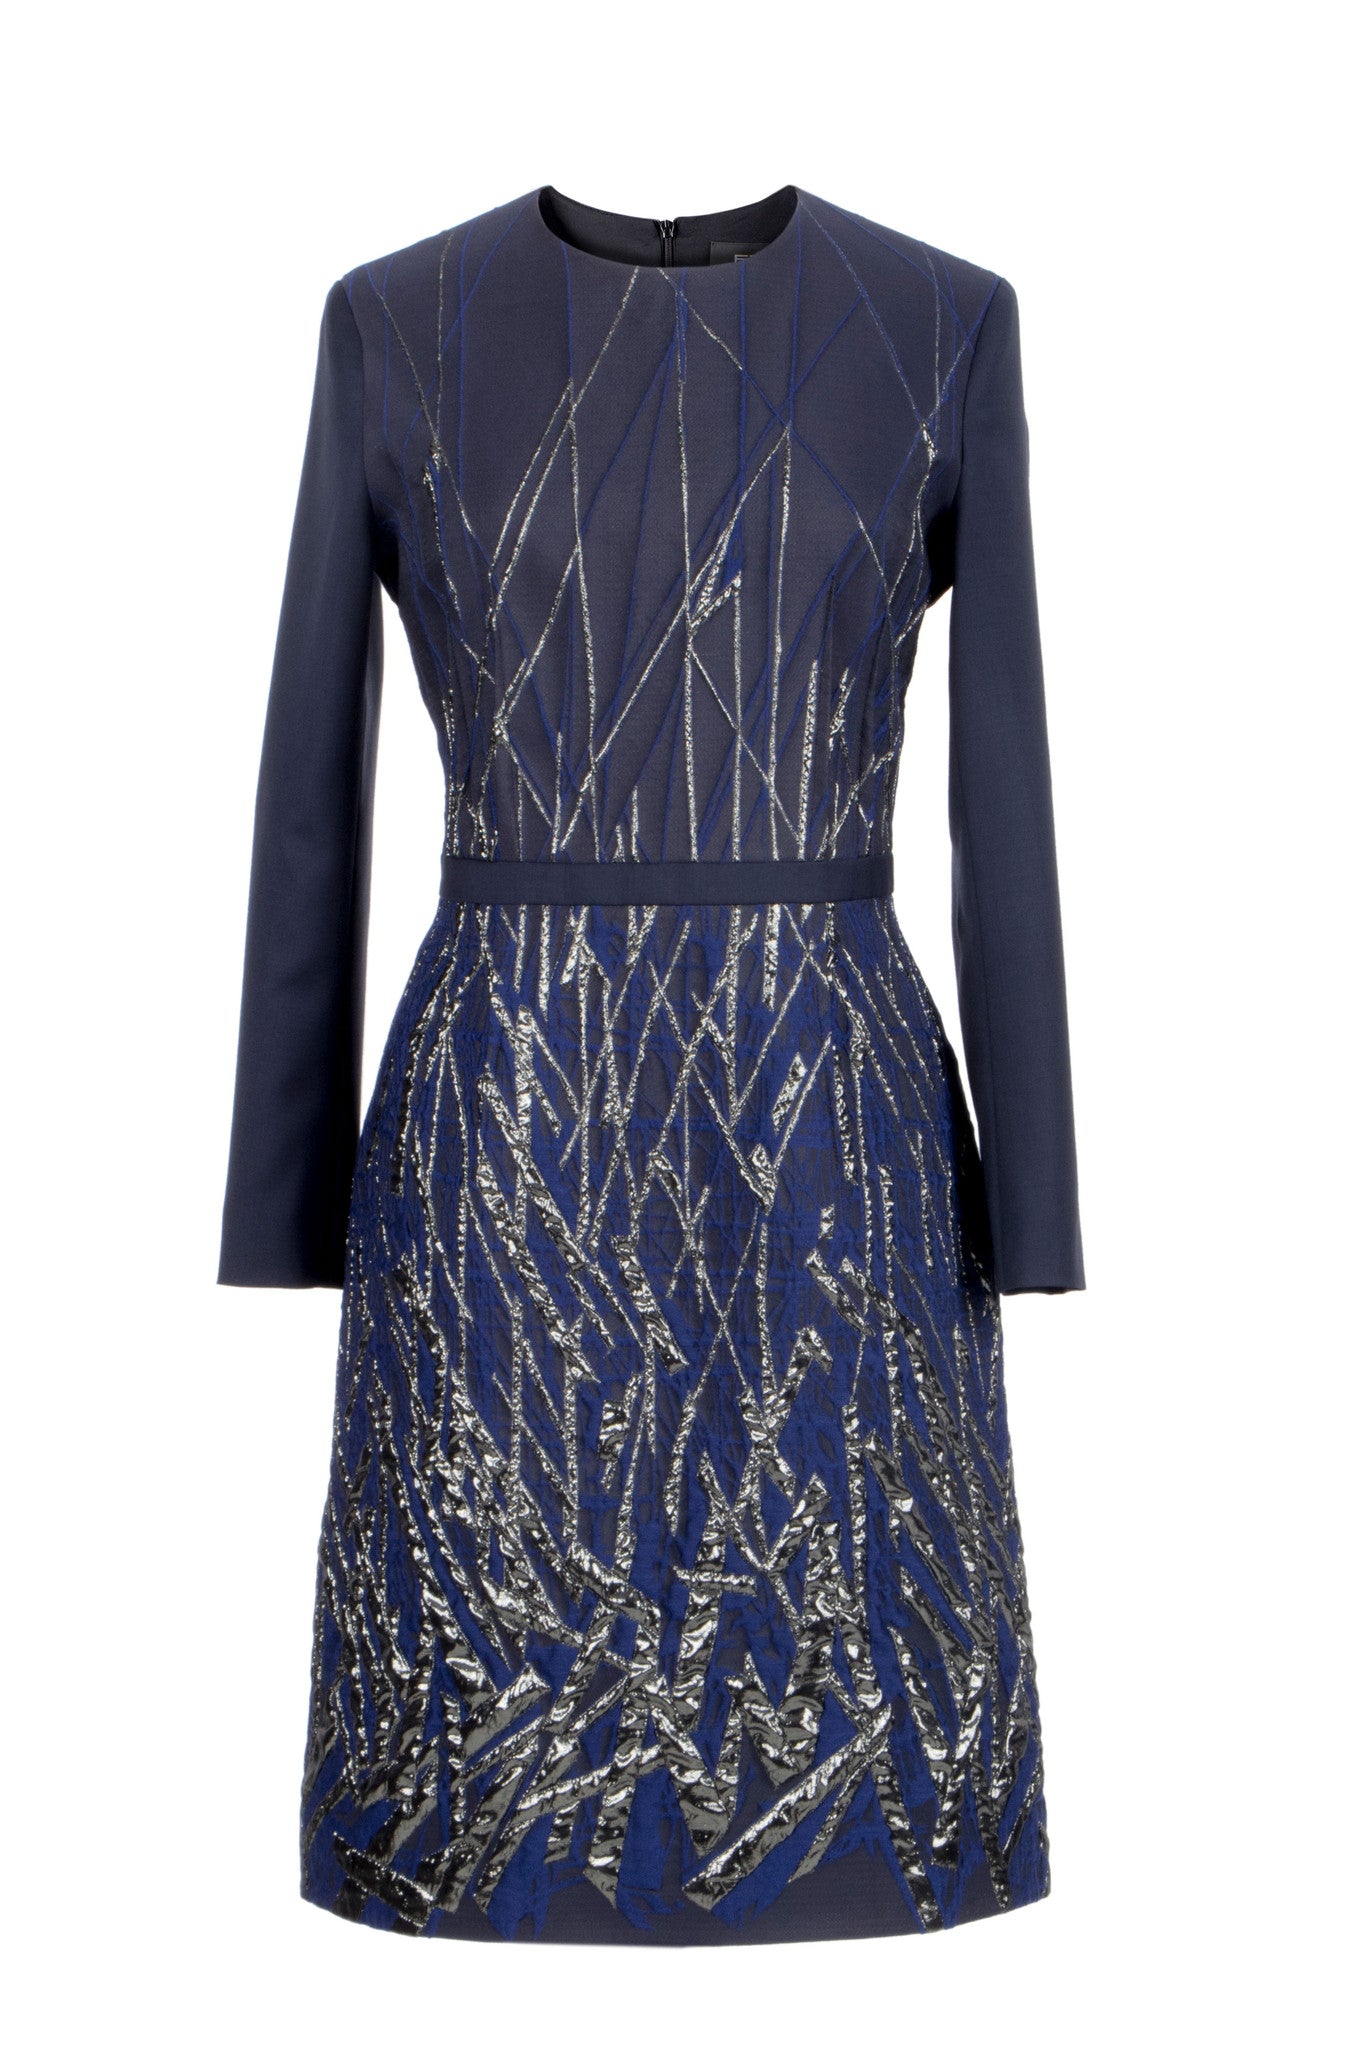 Blue evening dress with metallic details